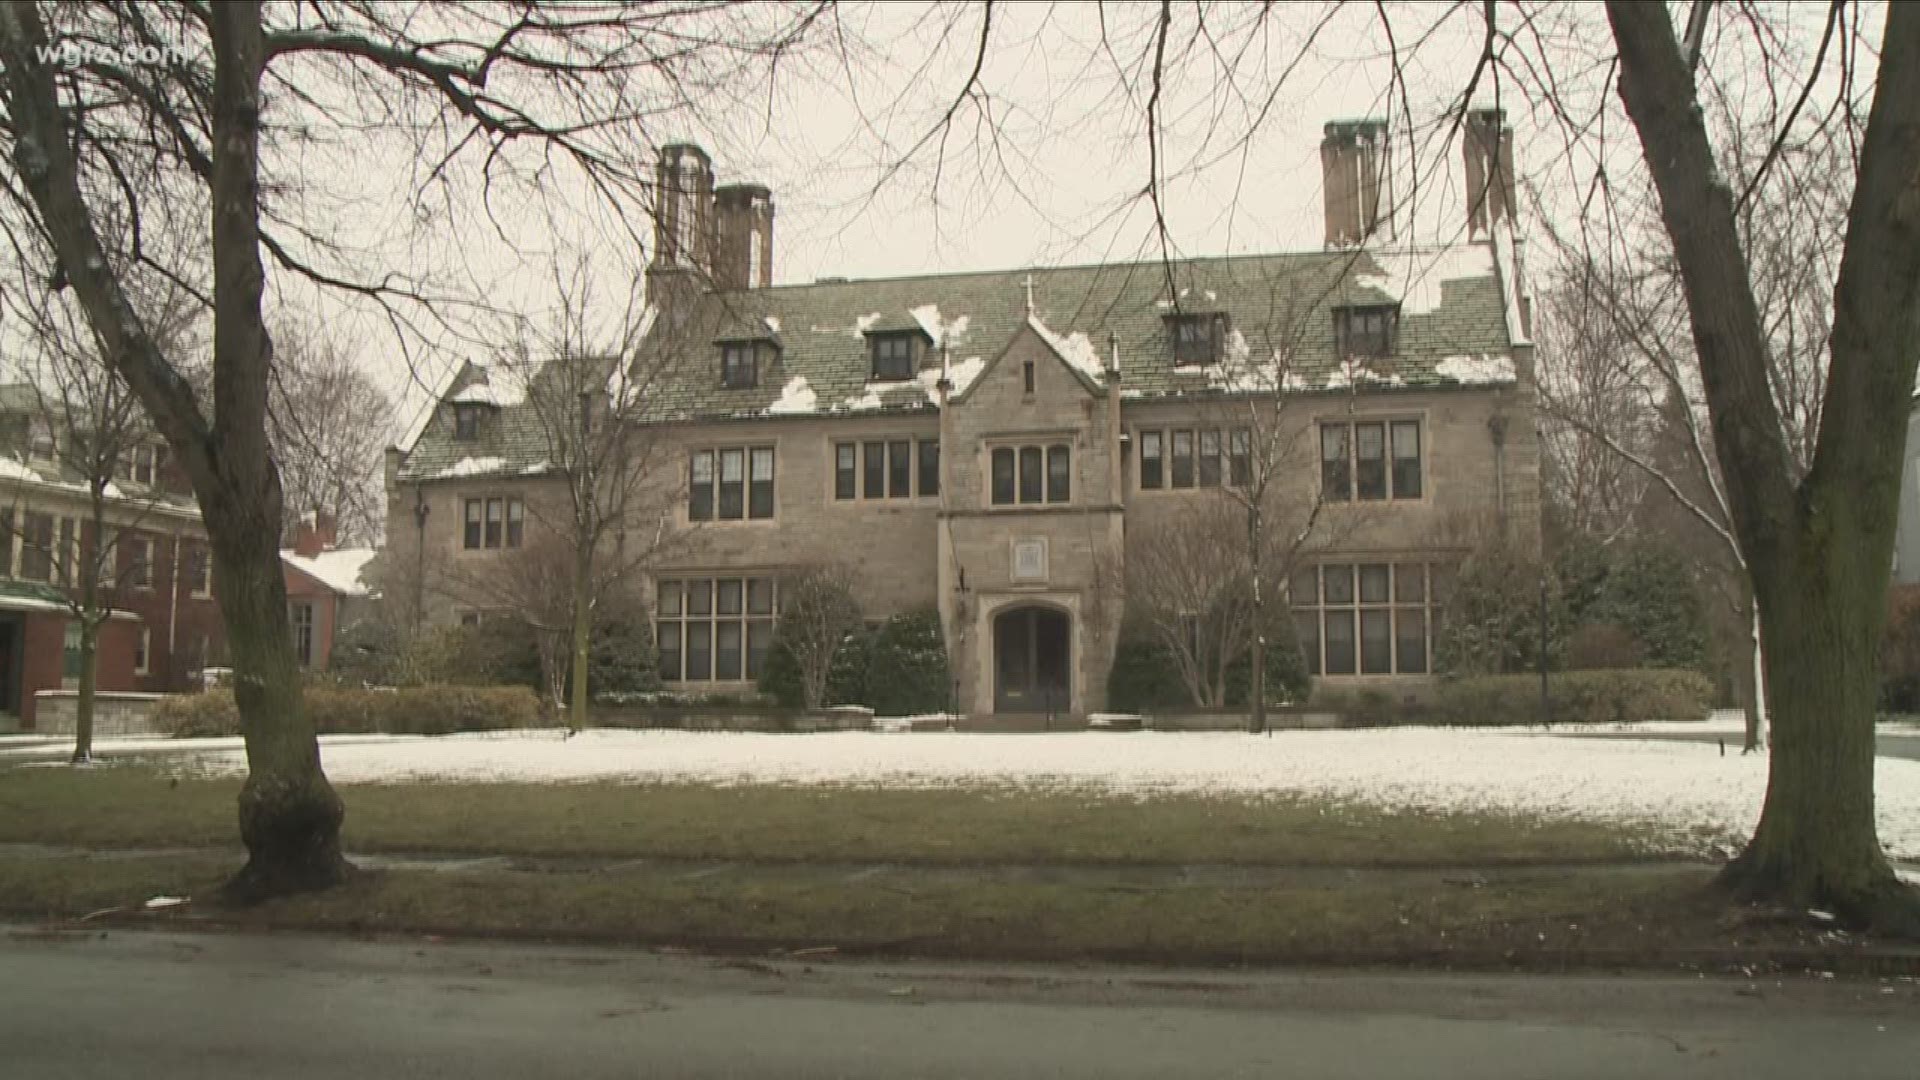 Bishop's Residence Sold For $1.5 Million